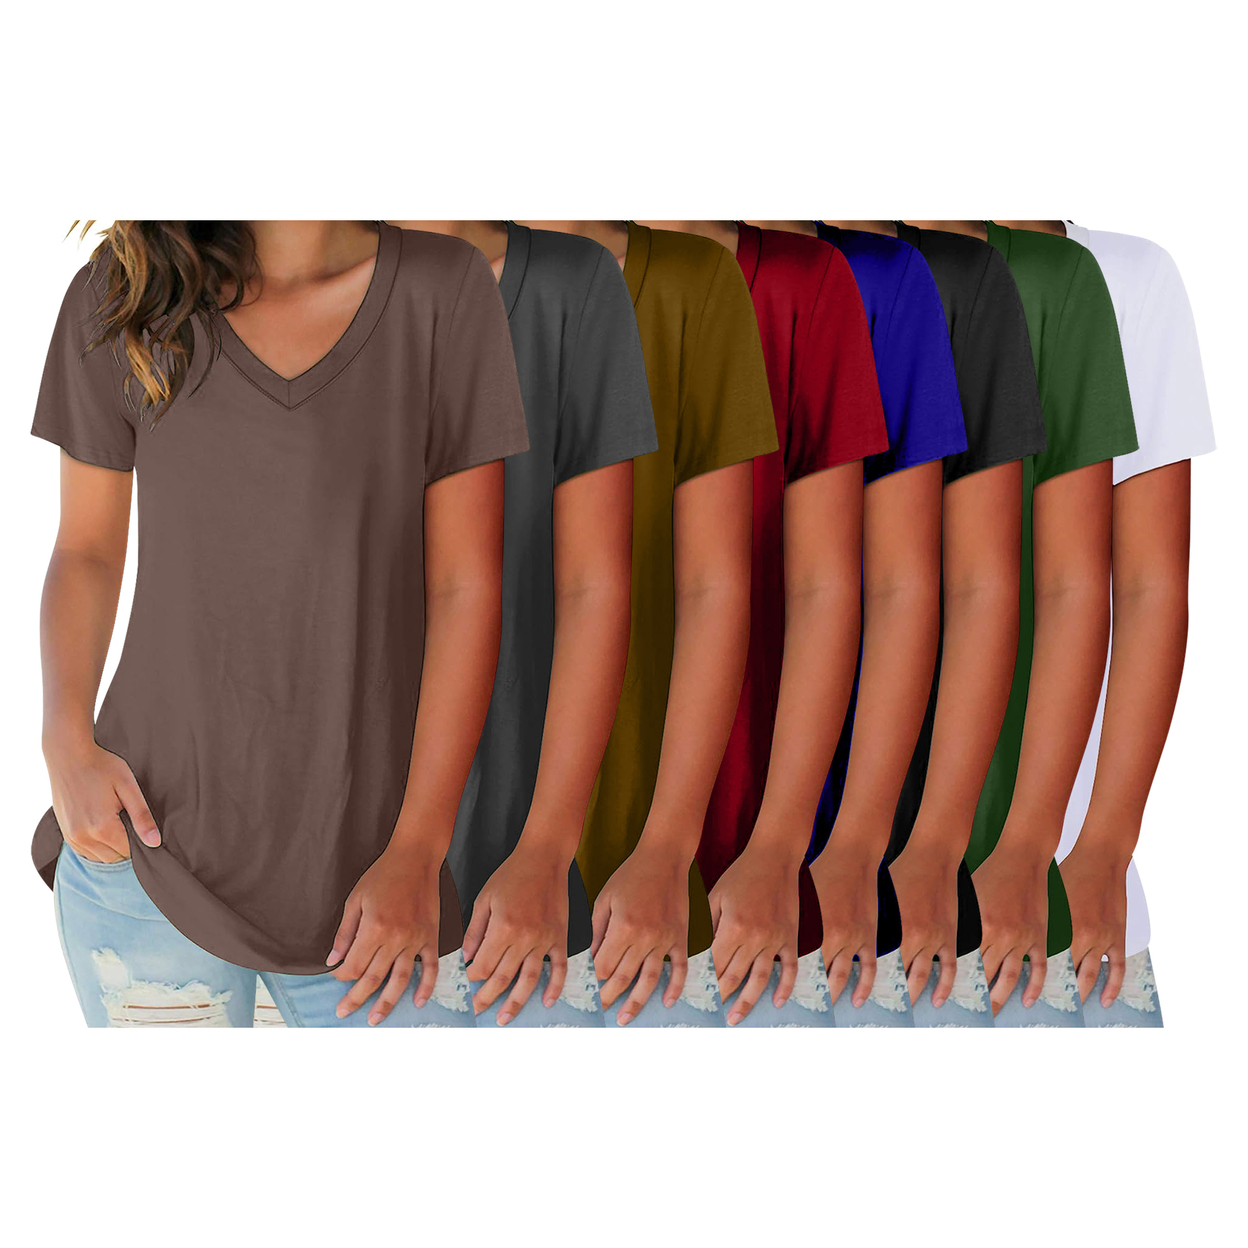 2-Pack: Women's Ultra Soft Smooth Cotton Blend Basic V-Neck Short Sleeve Shirts - Grey & Green, Large